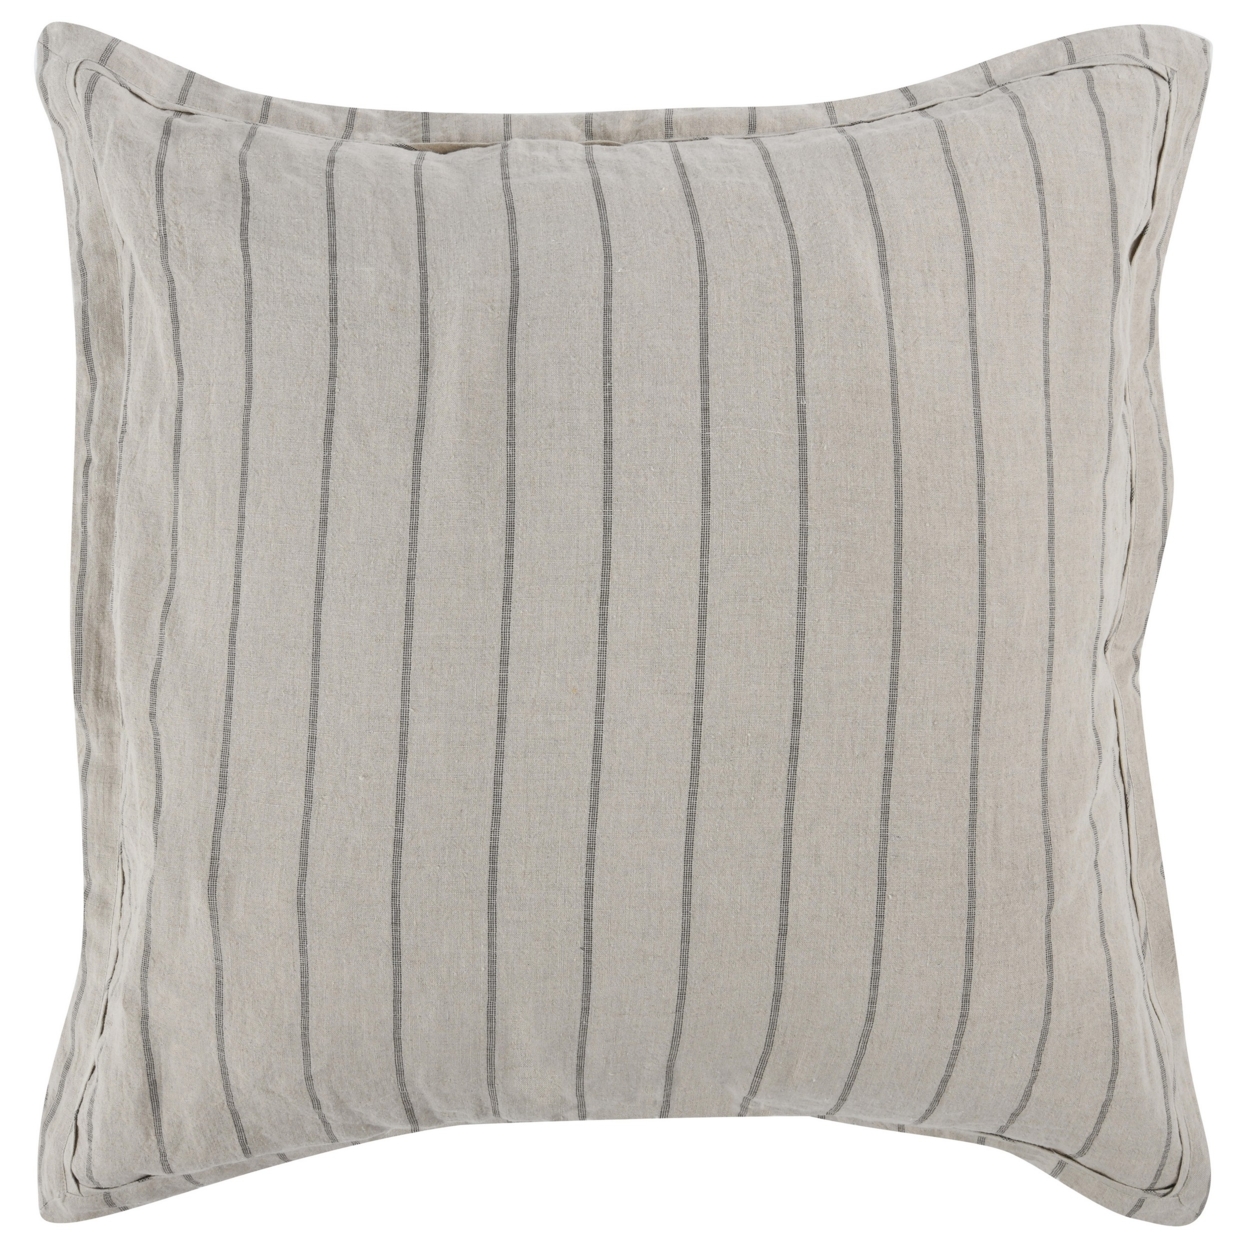 Tara 26 Inch Linen Square Euro Pillow Sham With Woven Stripe Design, Beige- Saltoro Sherpi